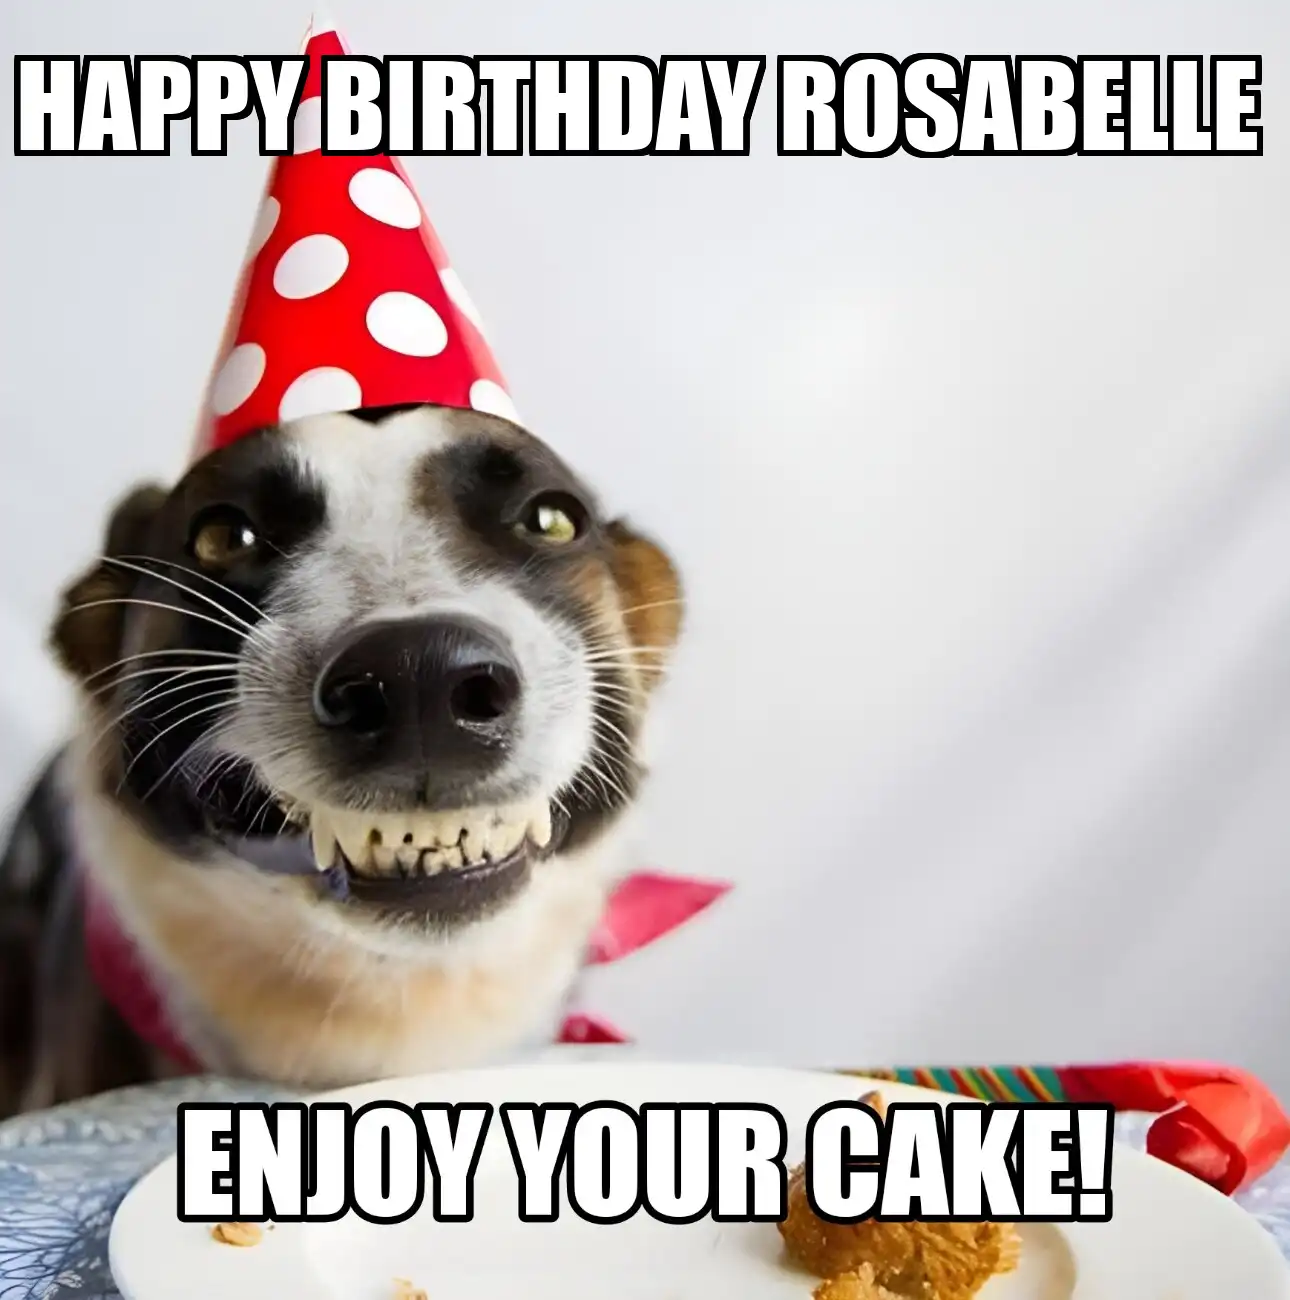 Happy Birthday Rosabelle Enjoy Your Cake Dog Meme